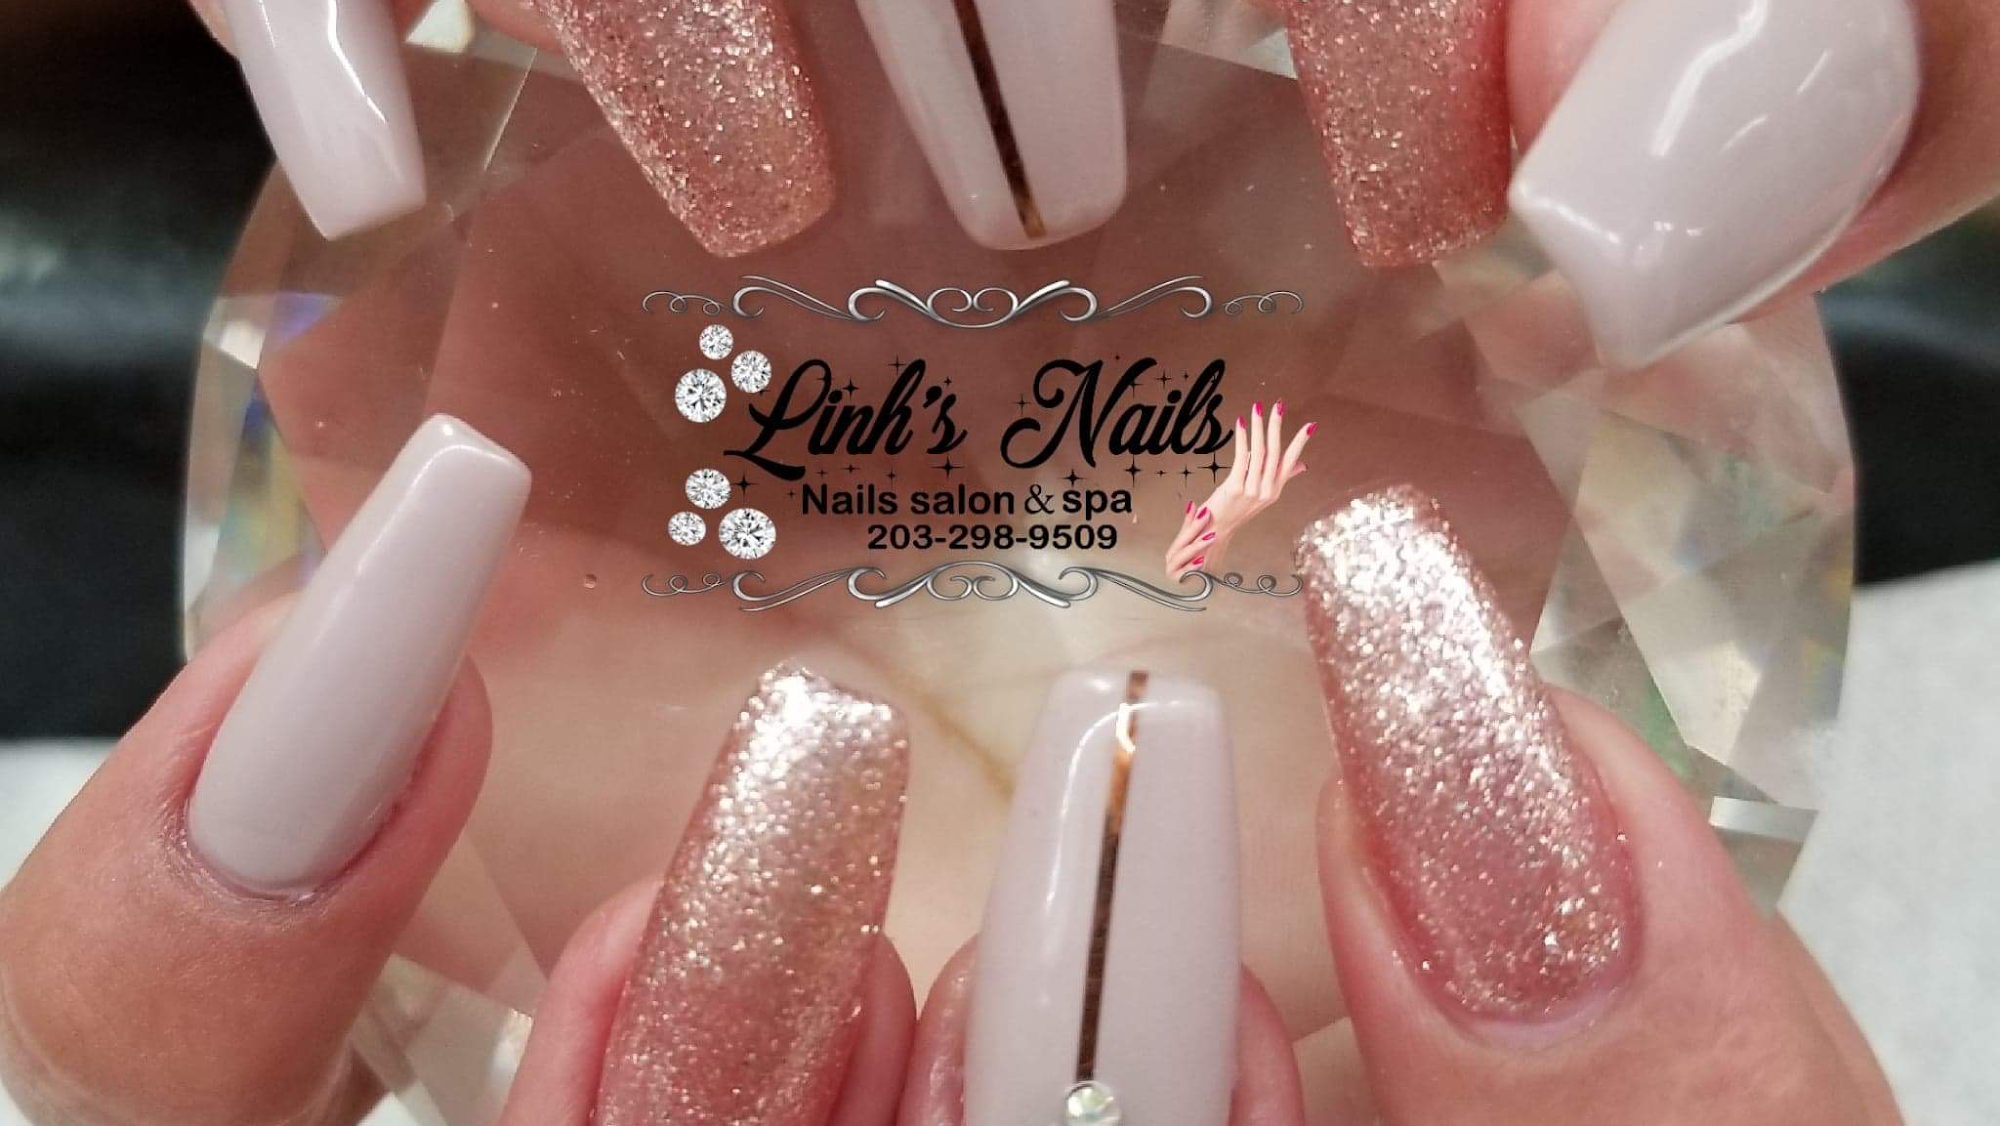 Linh's Nails